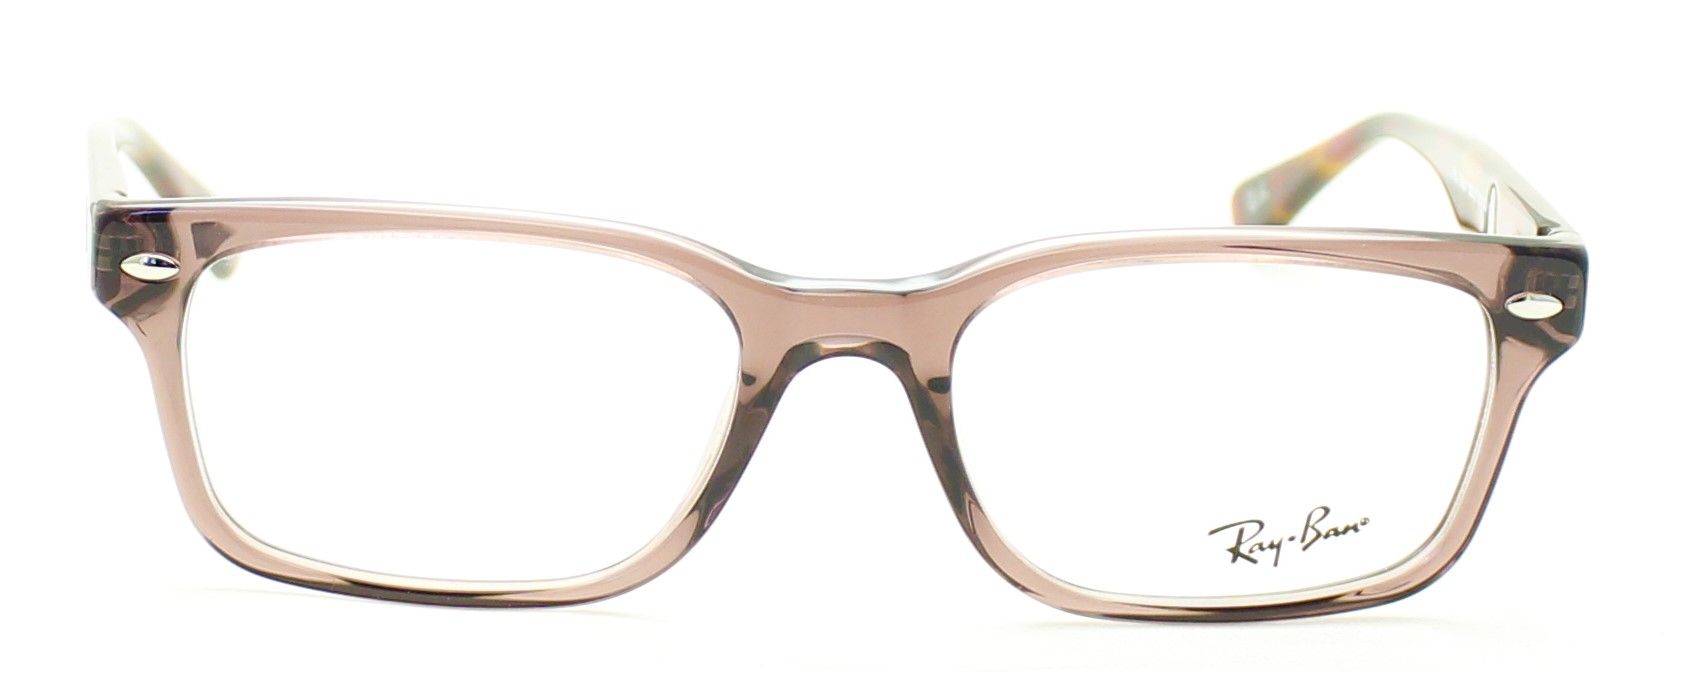 RAY BAN RB 5286 5628 51mm RX Optical FRAMES RAYBAN Glasses Eyewear ...